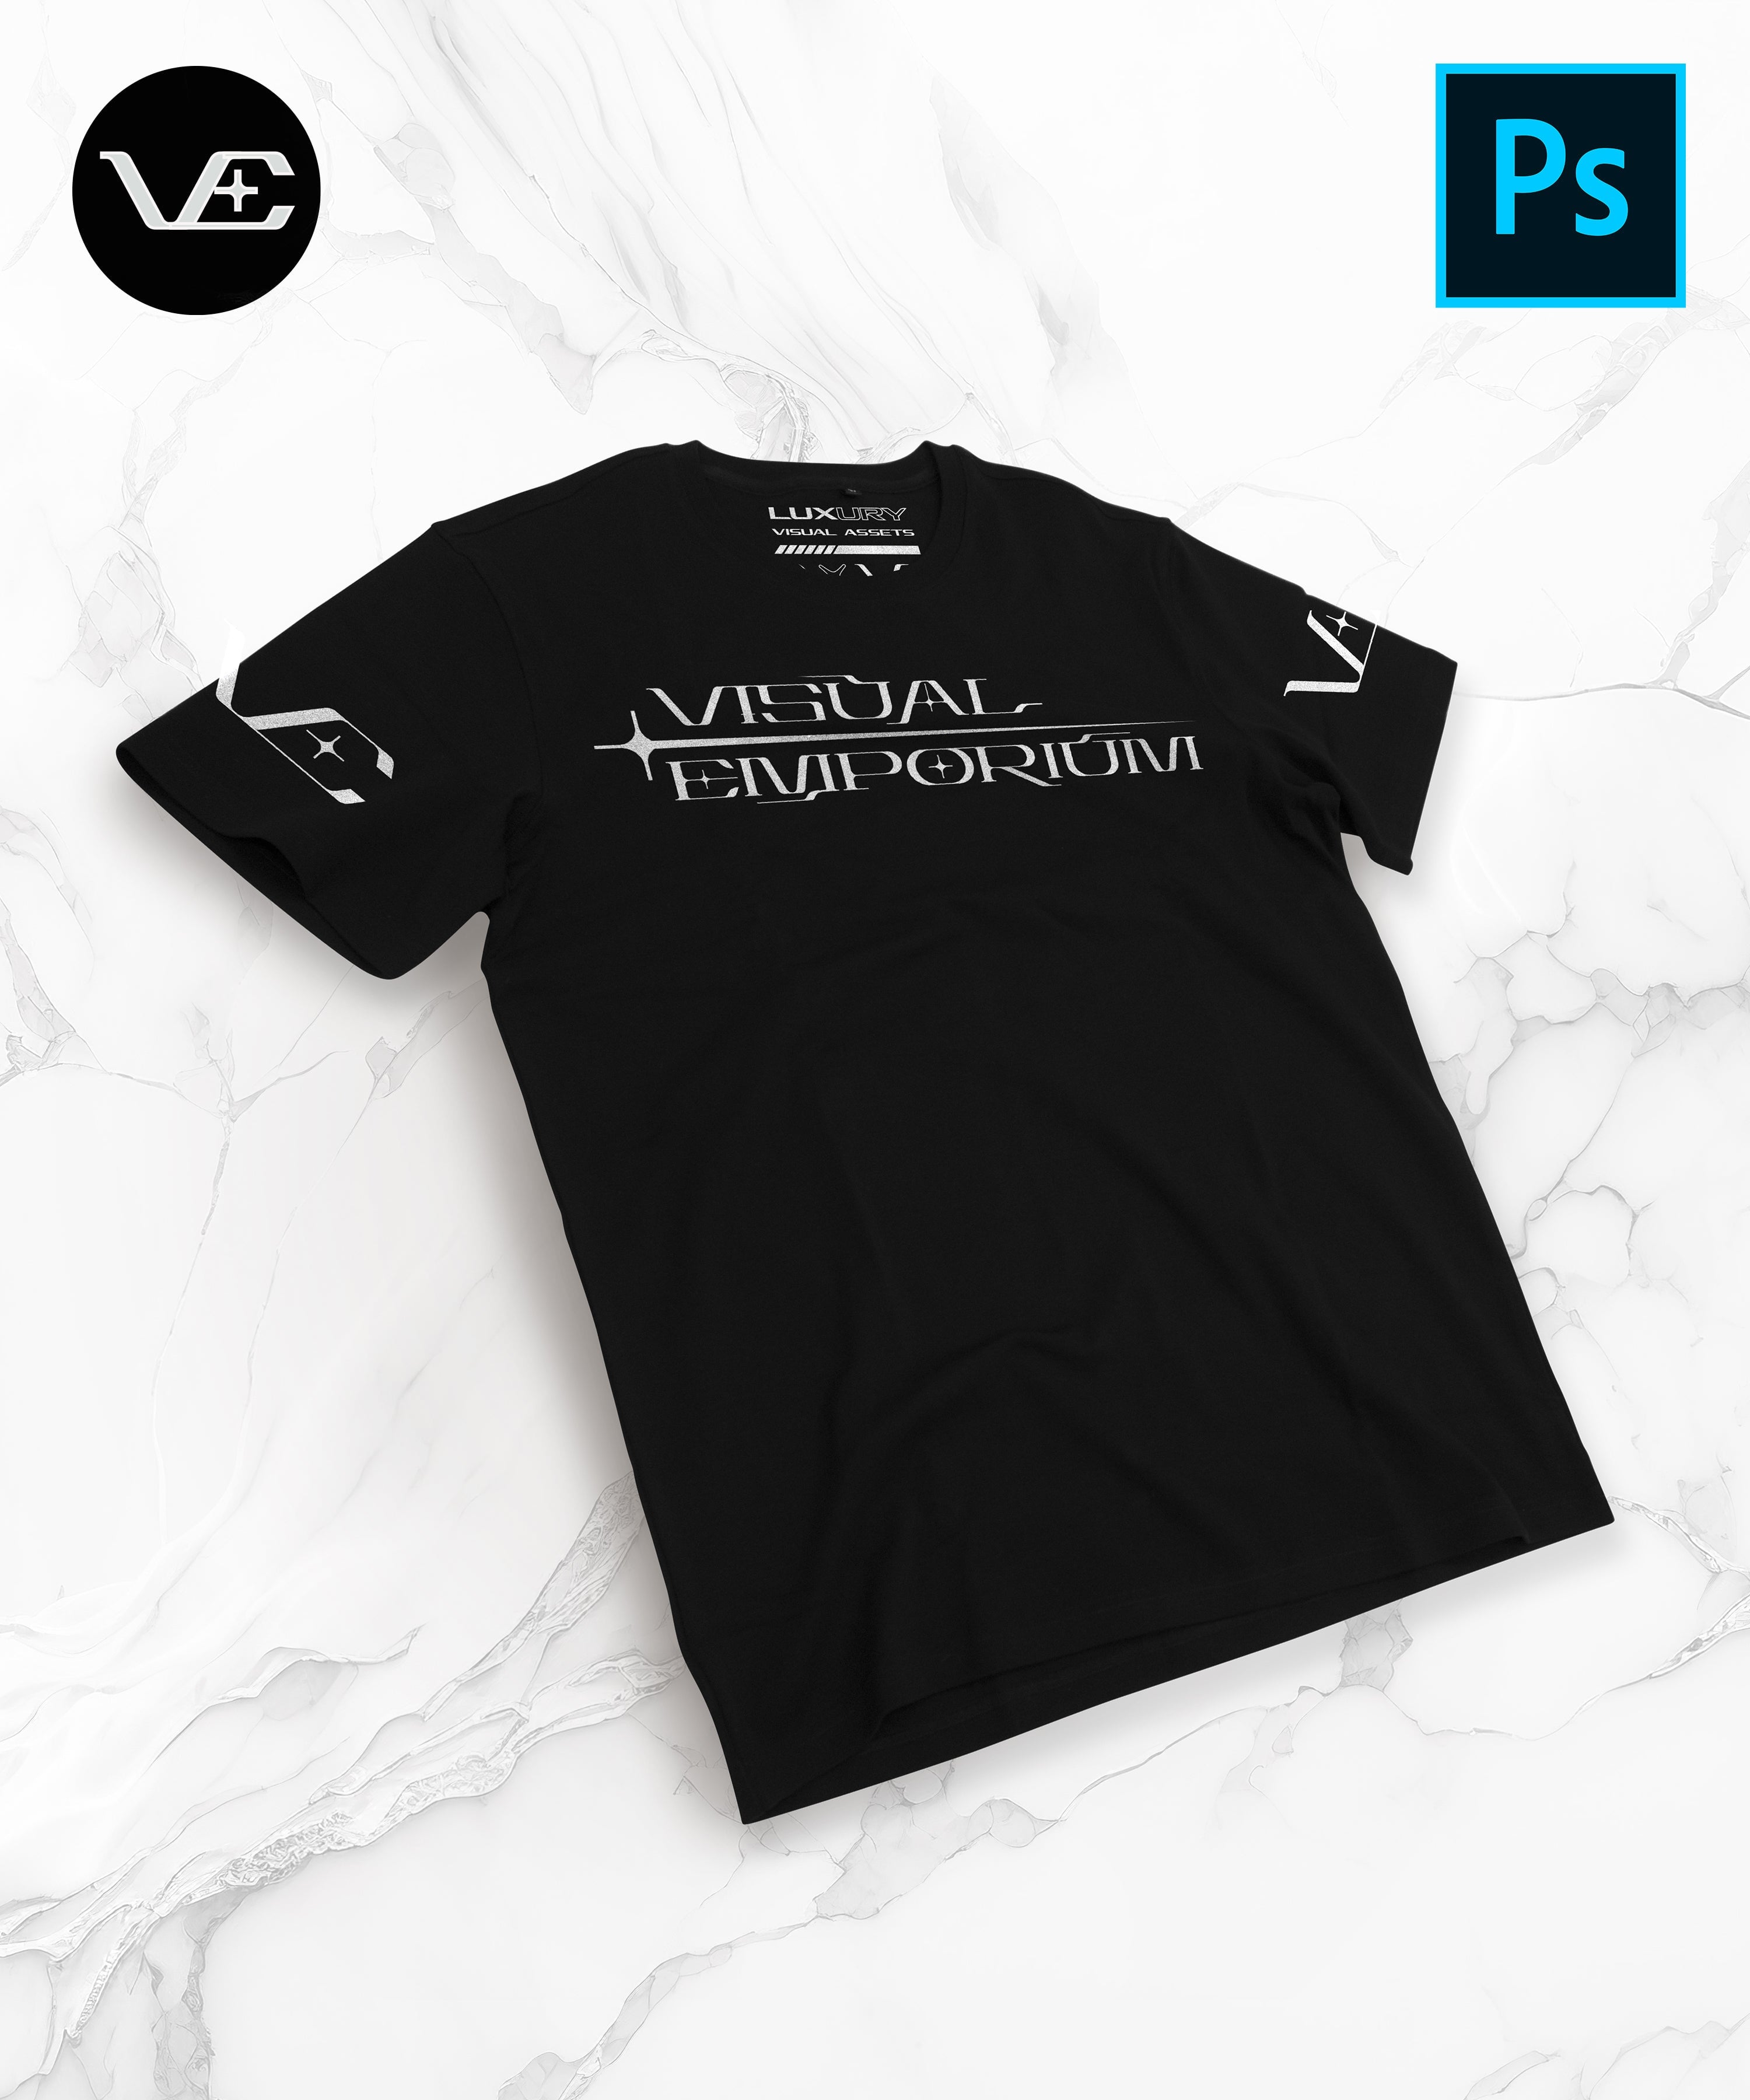 Visual Emporium - Flat T-Shirt - Premium Digital Mockup 